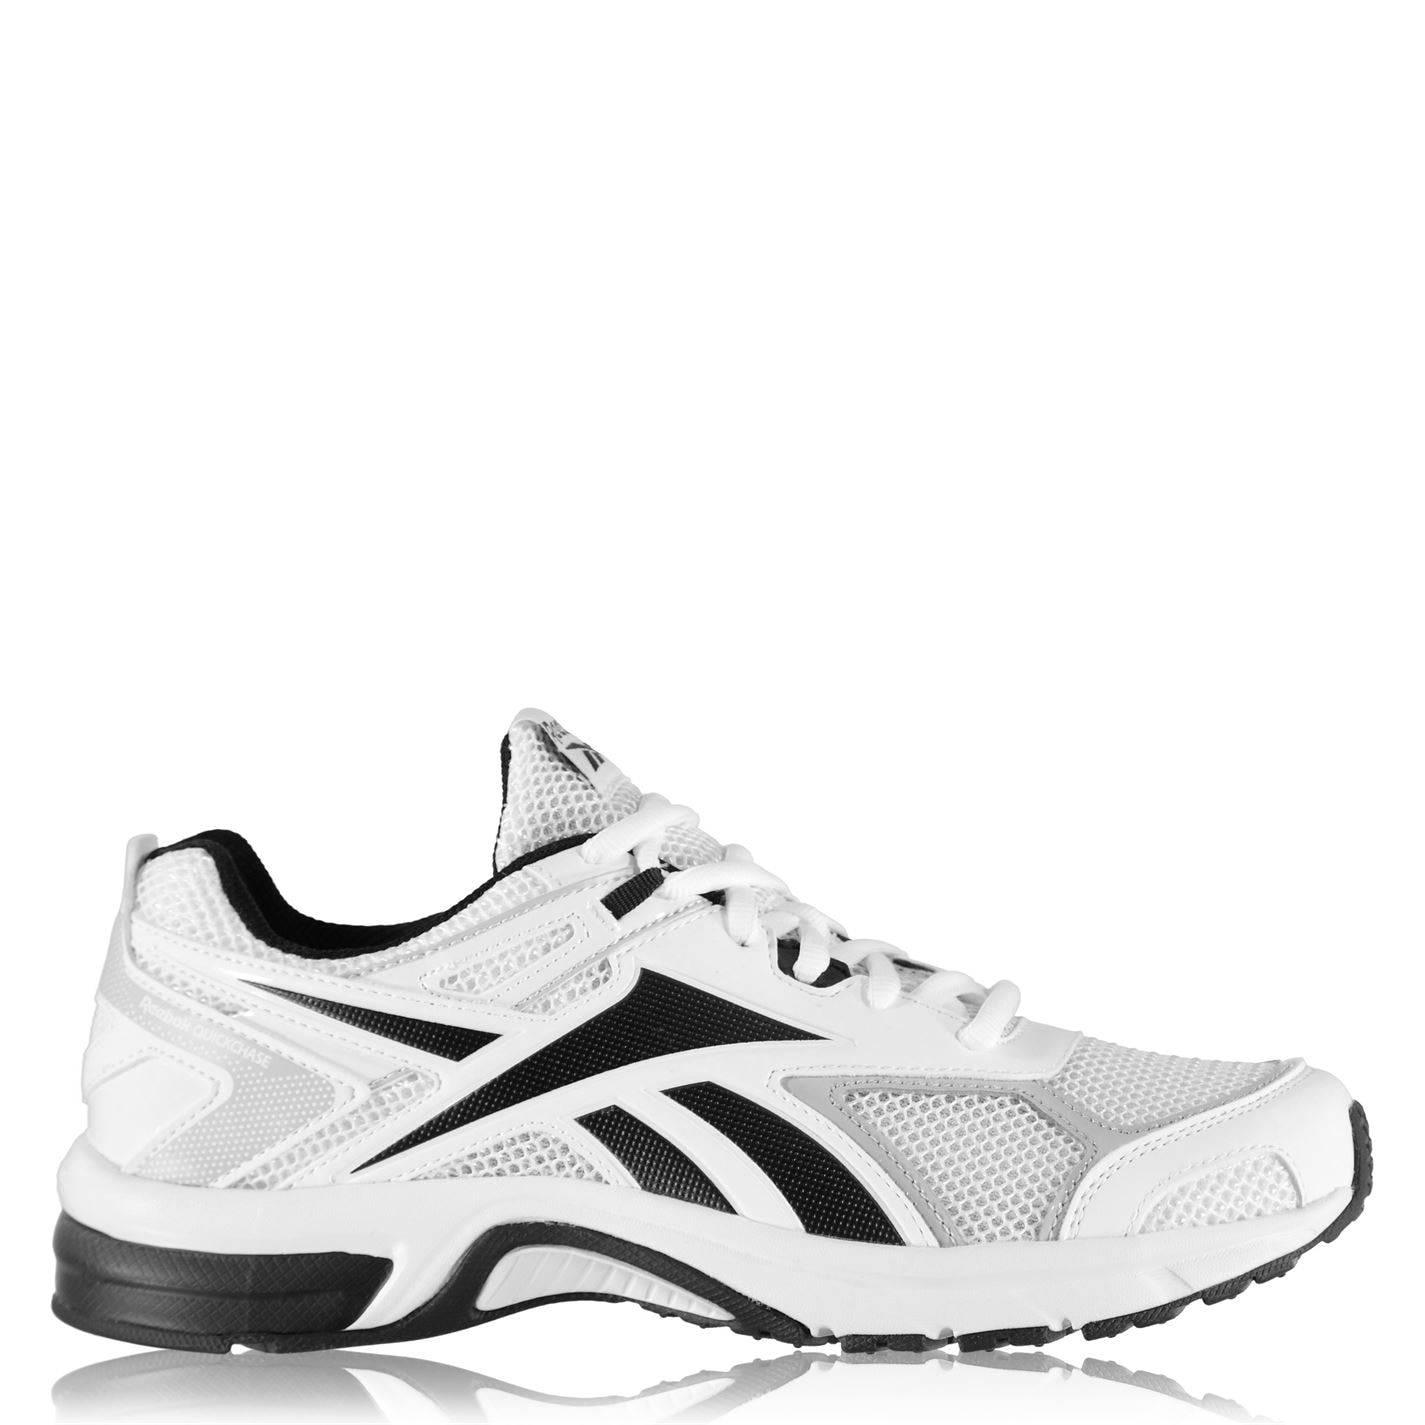 reebok men's quickchase running shoe